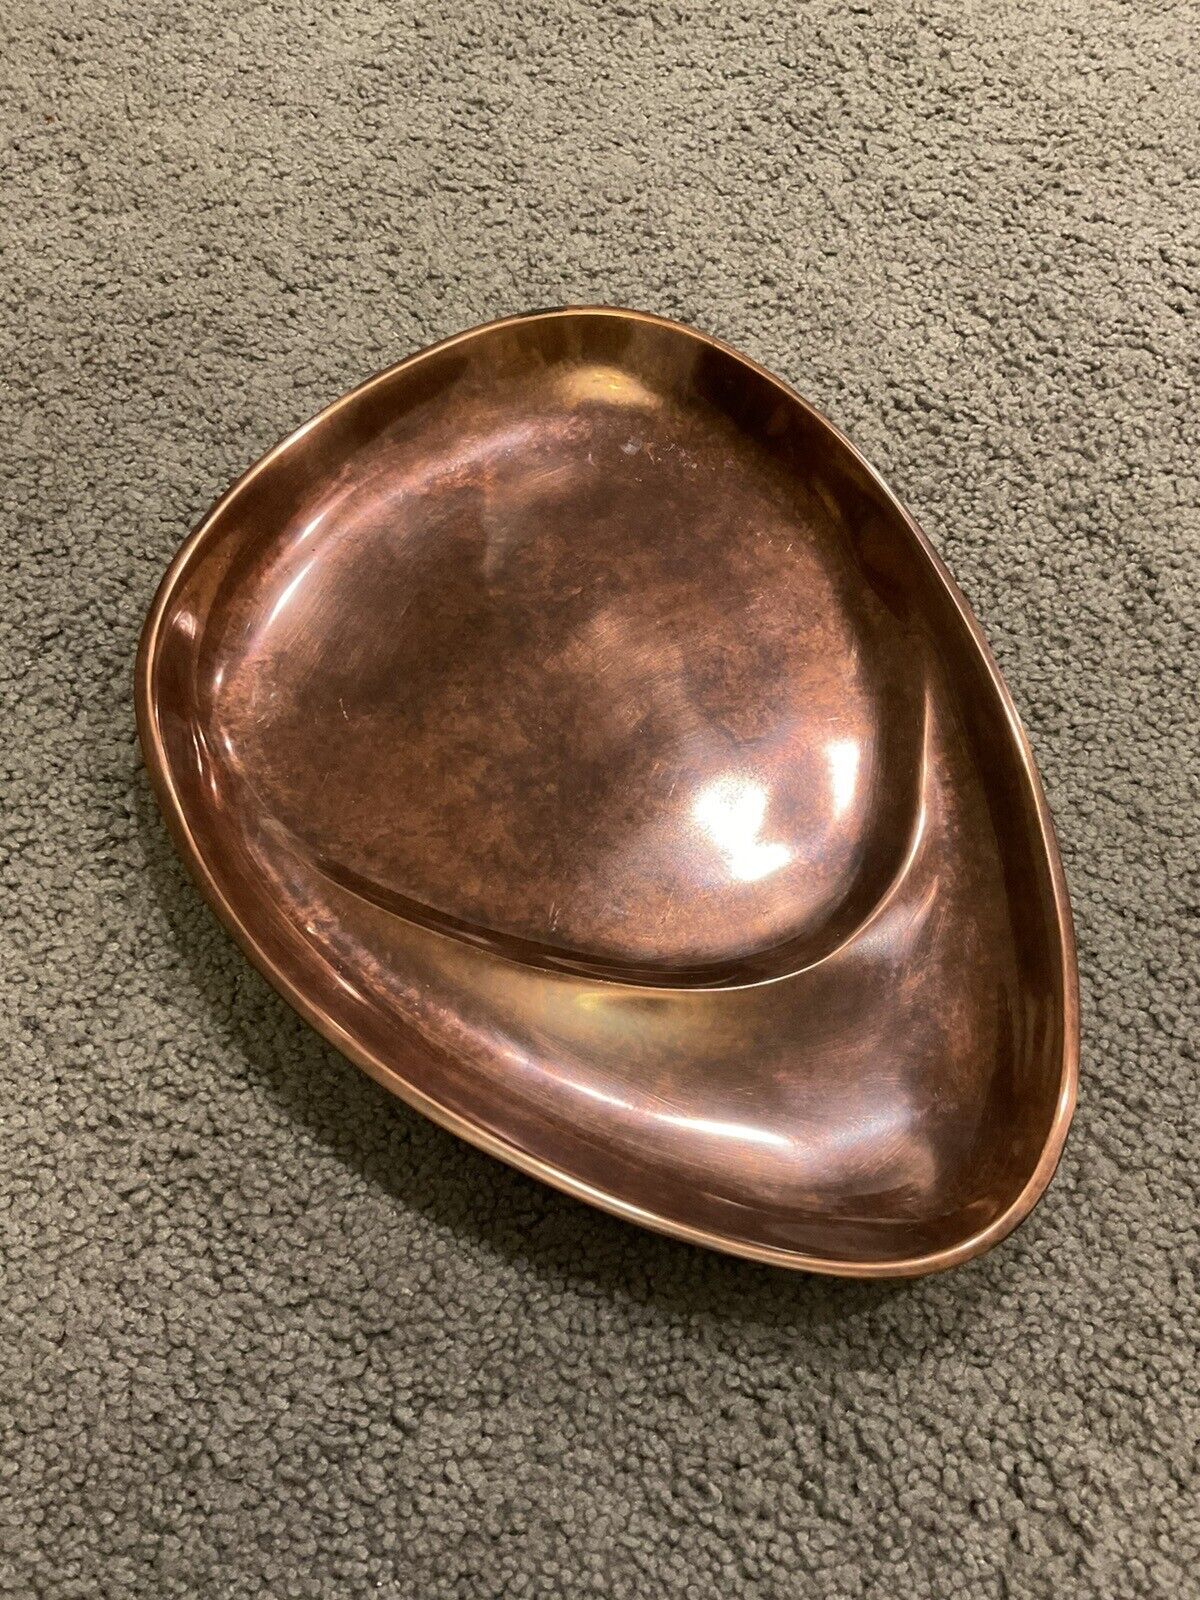 NAMBE Steve Cozzolino Vintage Copper Platter Tray Bowl Dish Signed, Gift